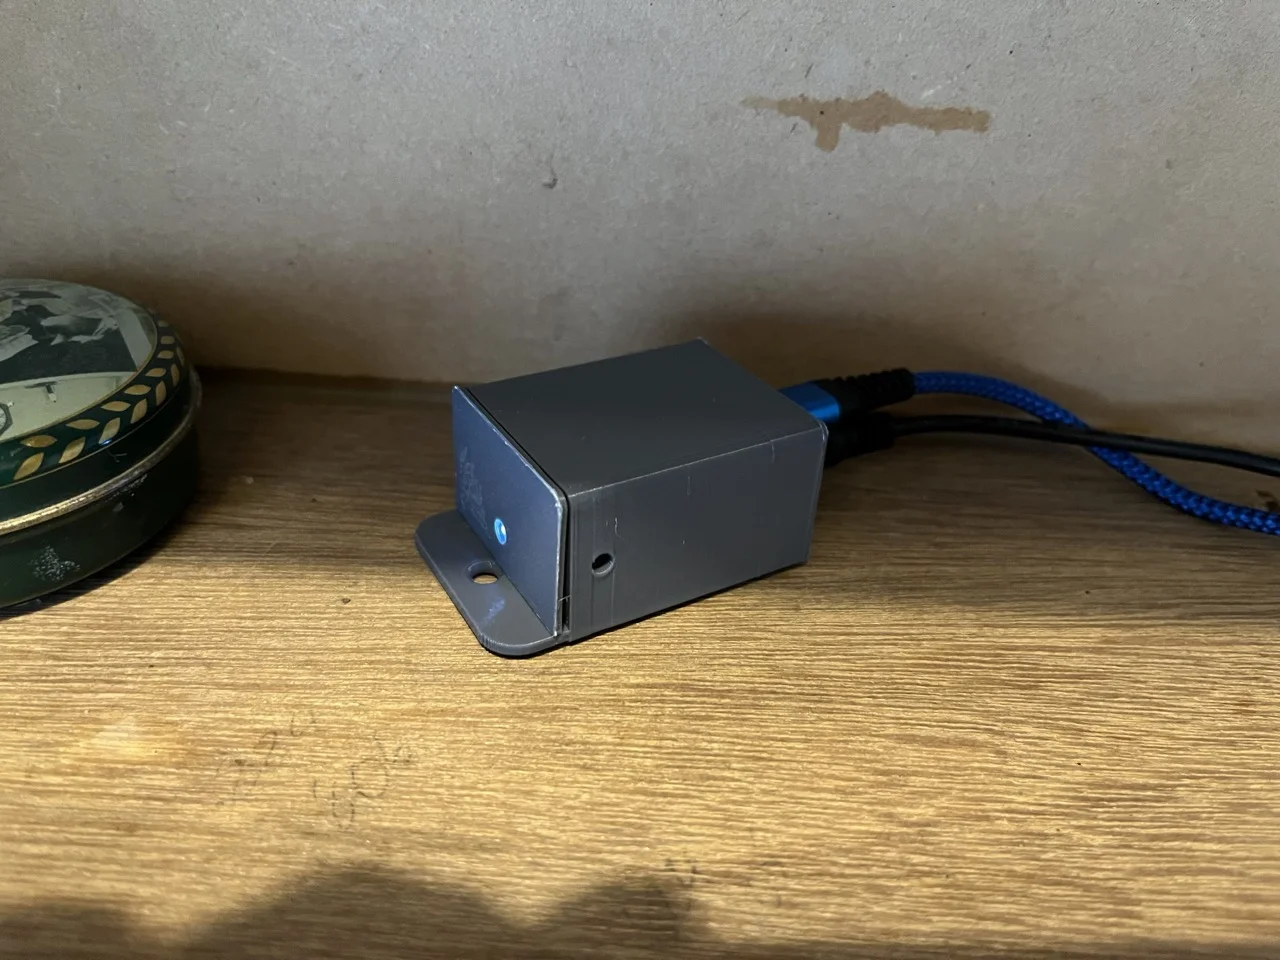 Sensor in 3d printed case